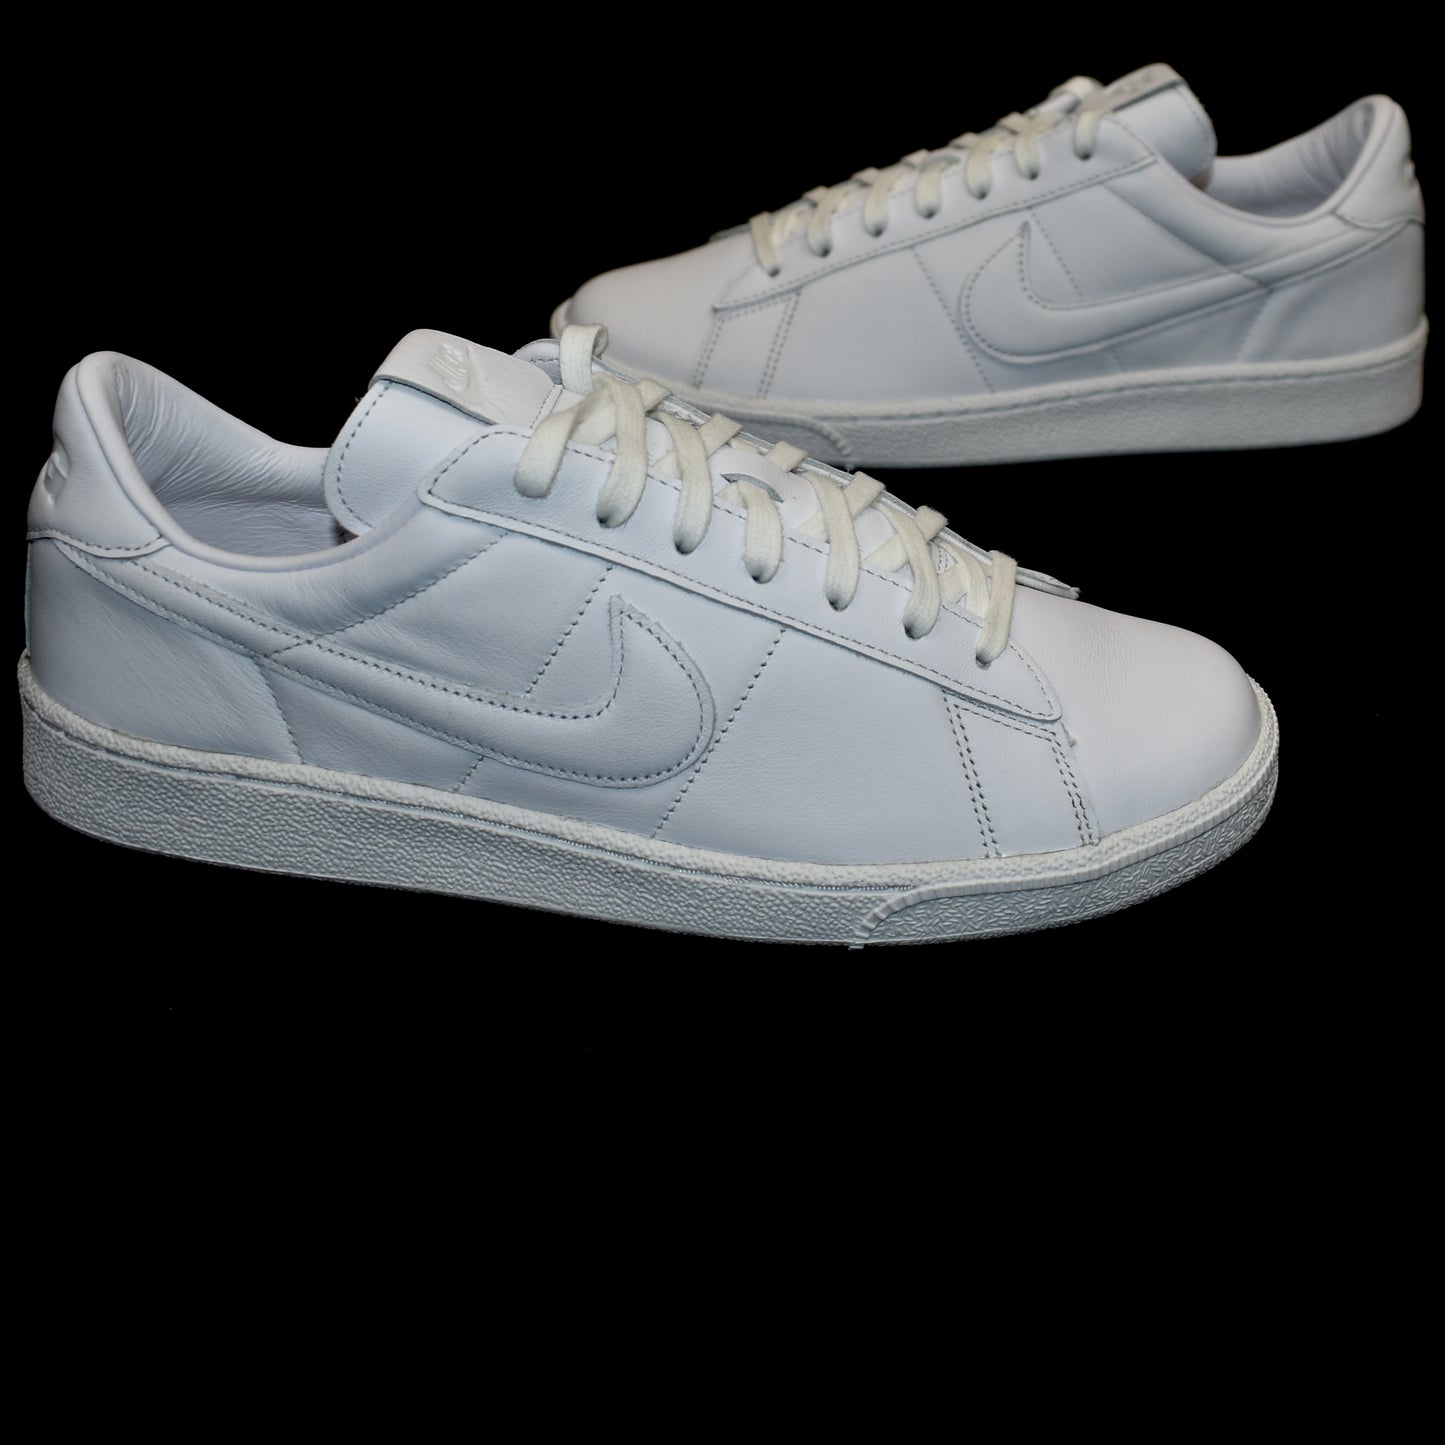 Comme des Garcons x Nike - Tennis Classic SP CDG (White)